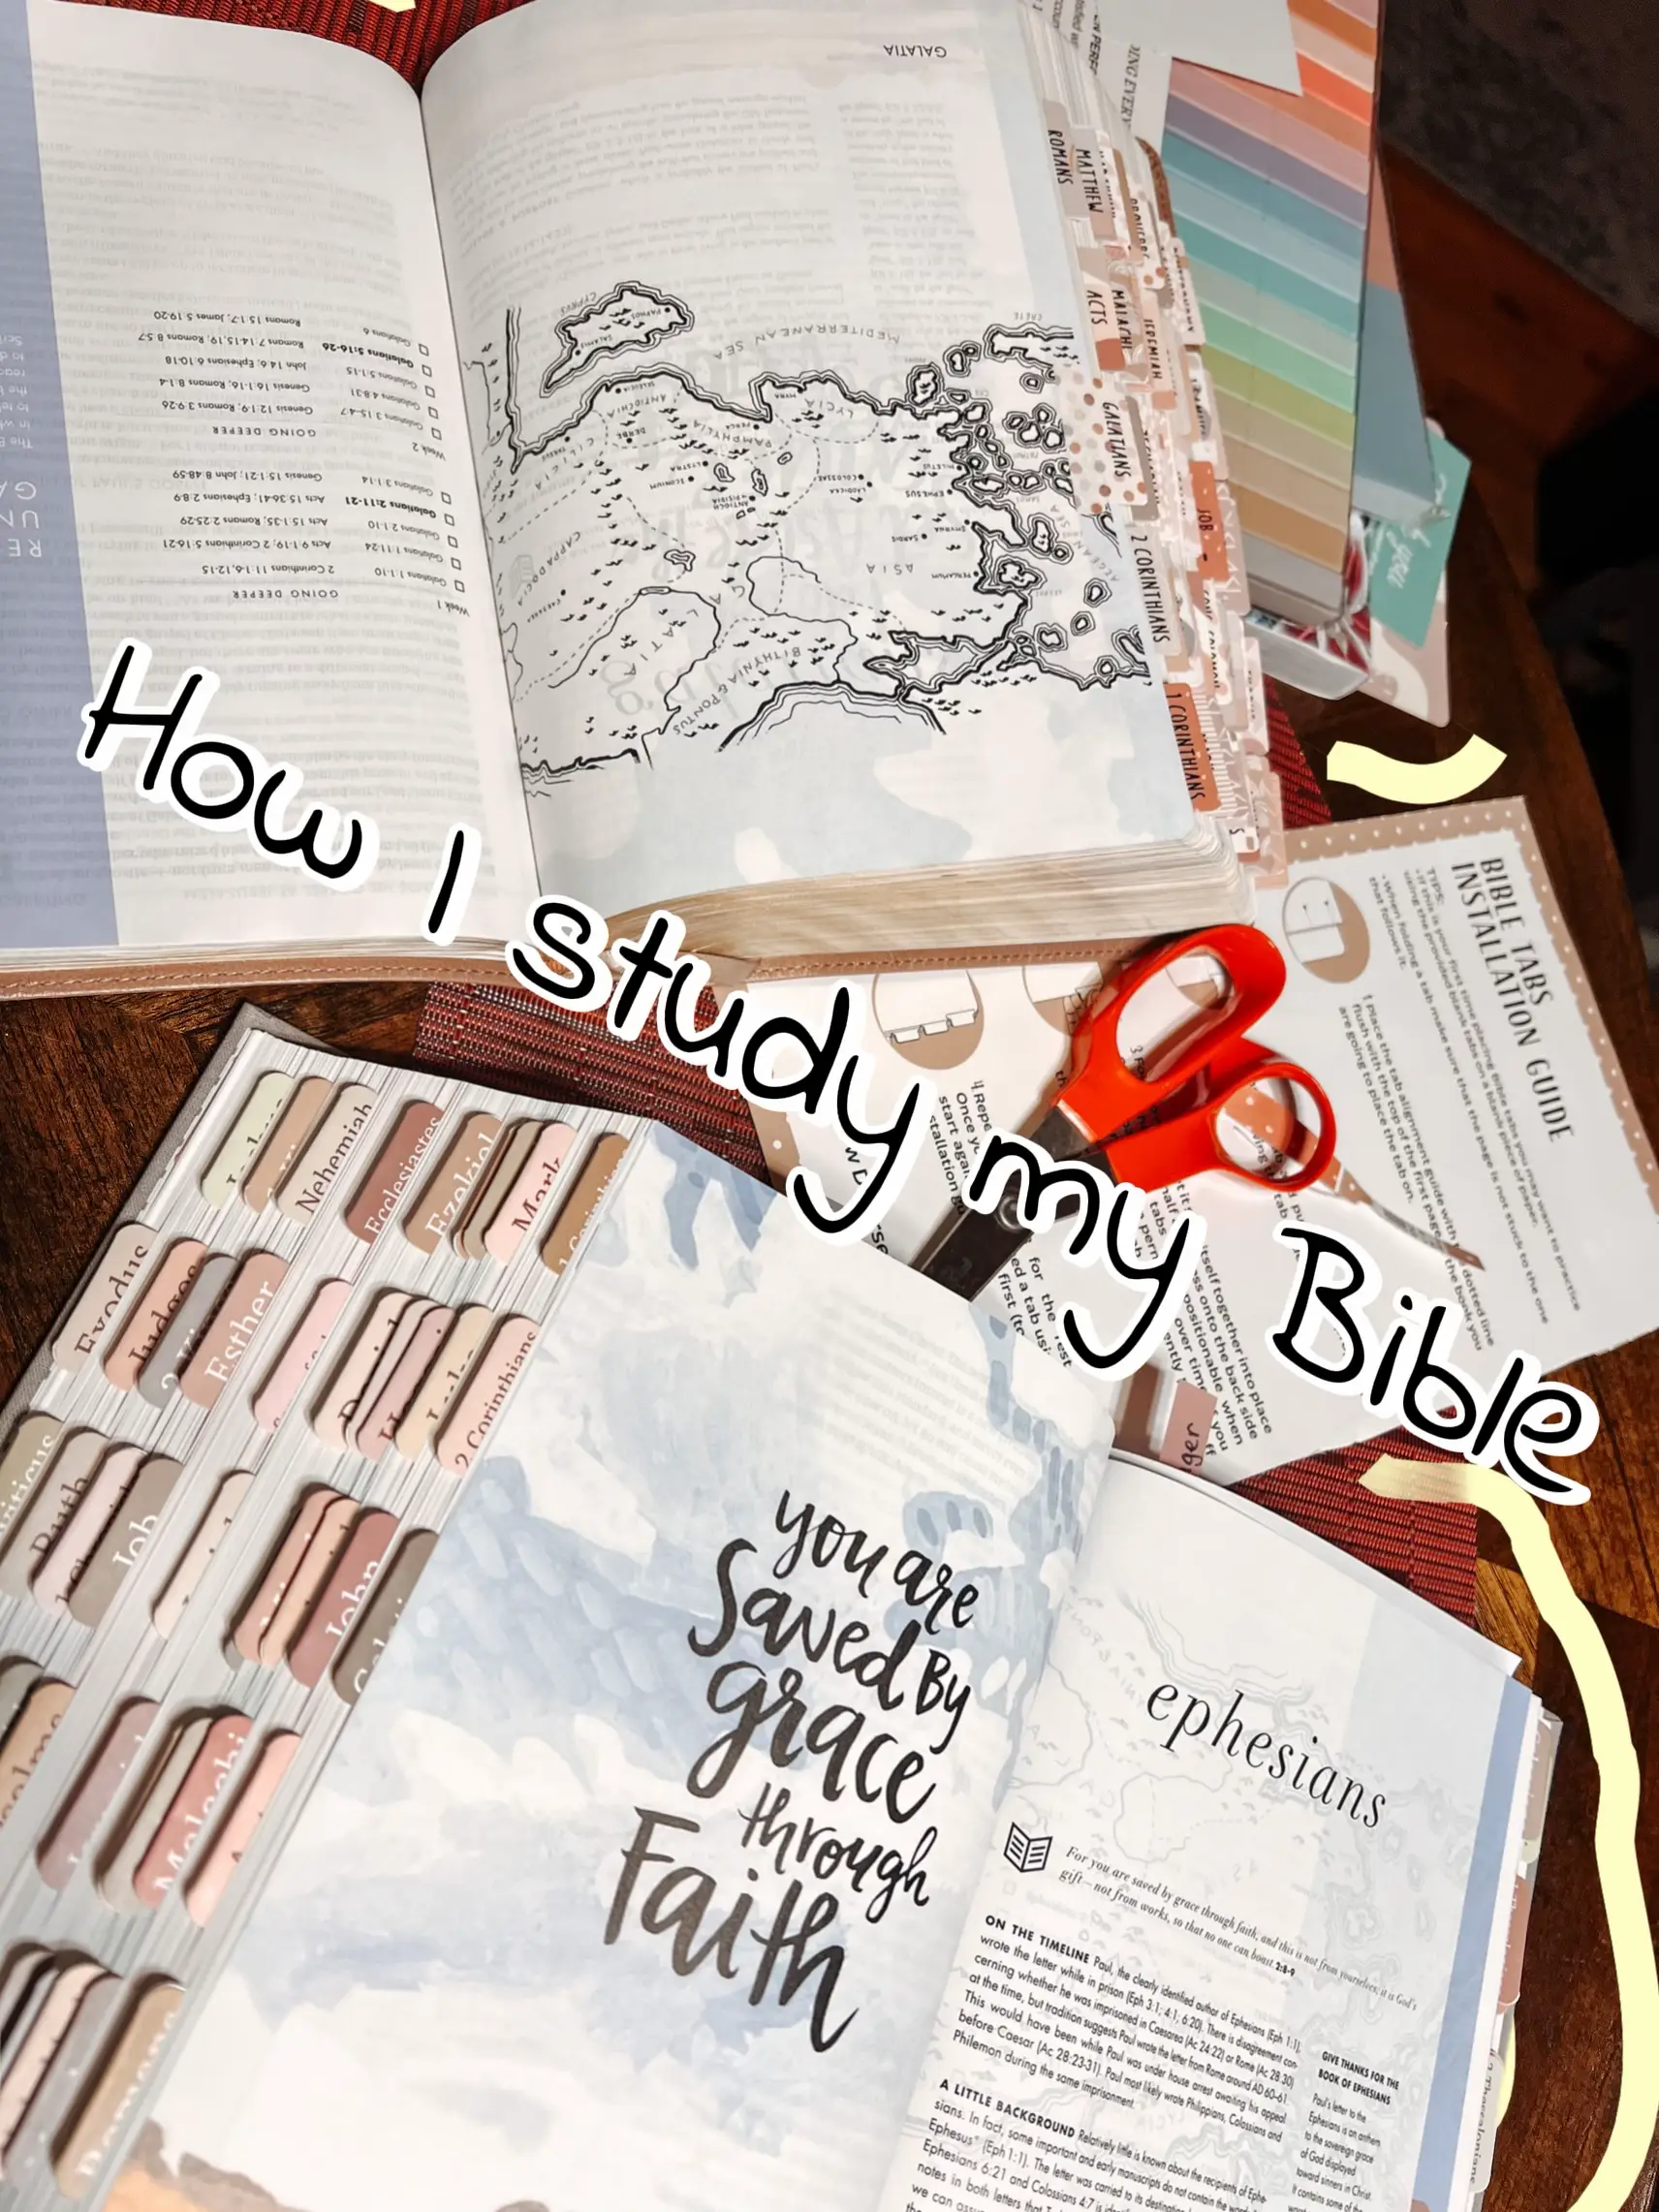 380 Bible Journaling Free ideas  bible journaling, bible, bible